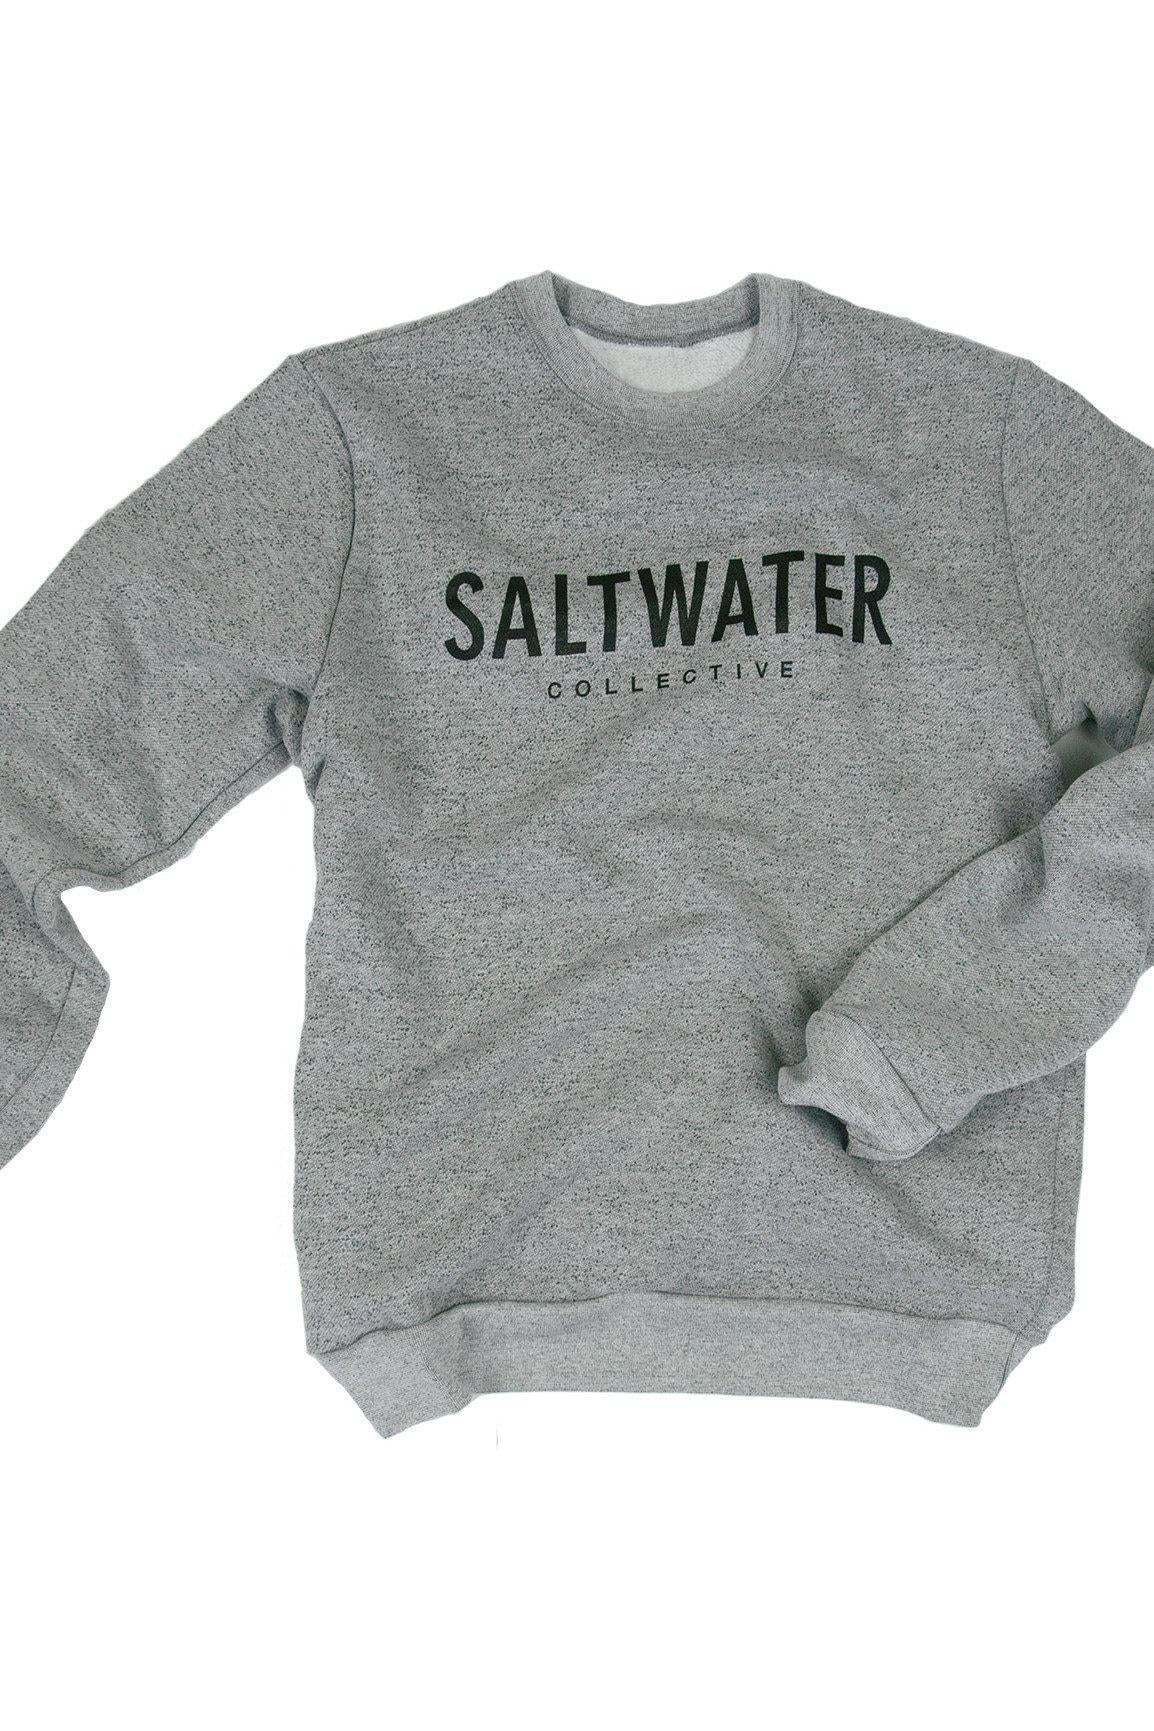 A heather grey crewneck sweatshirt with a black logo.